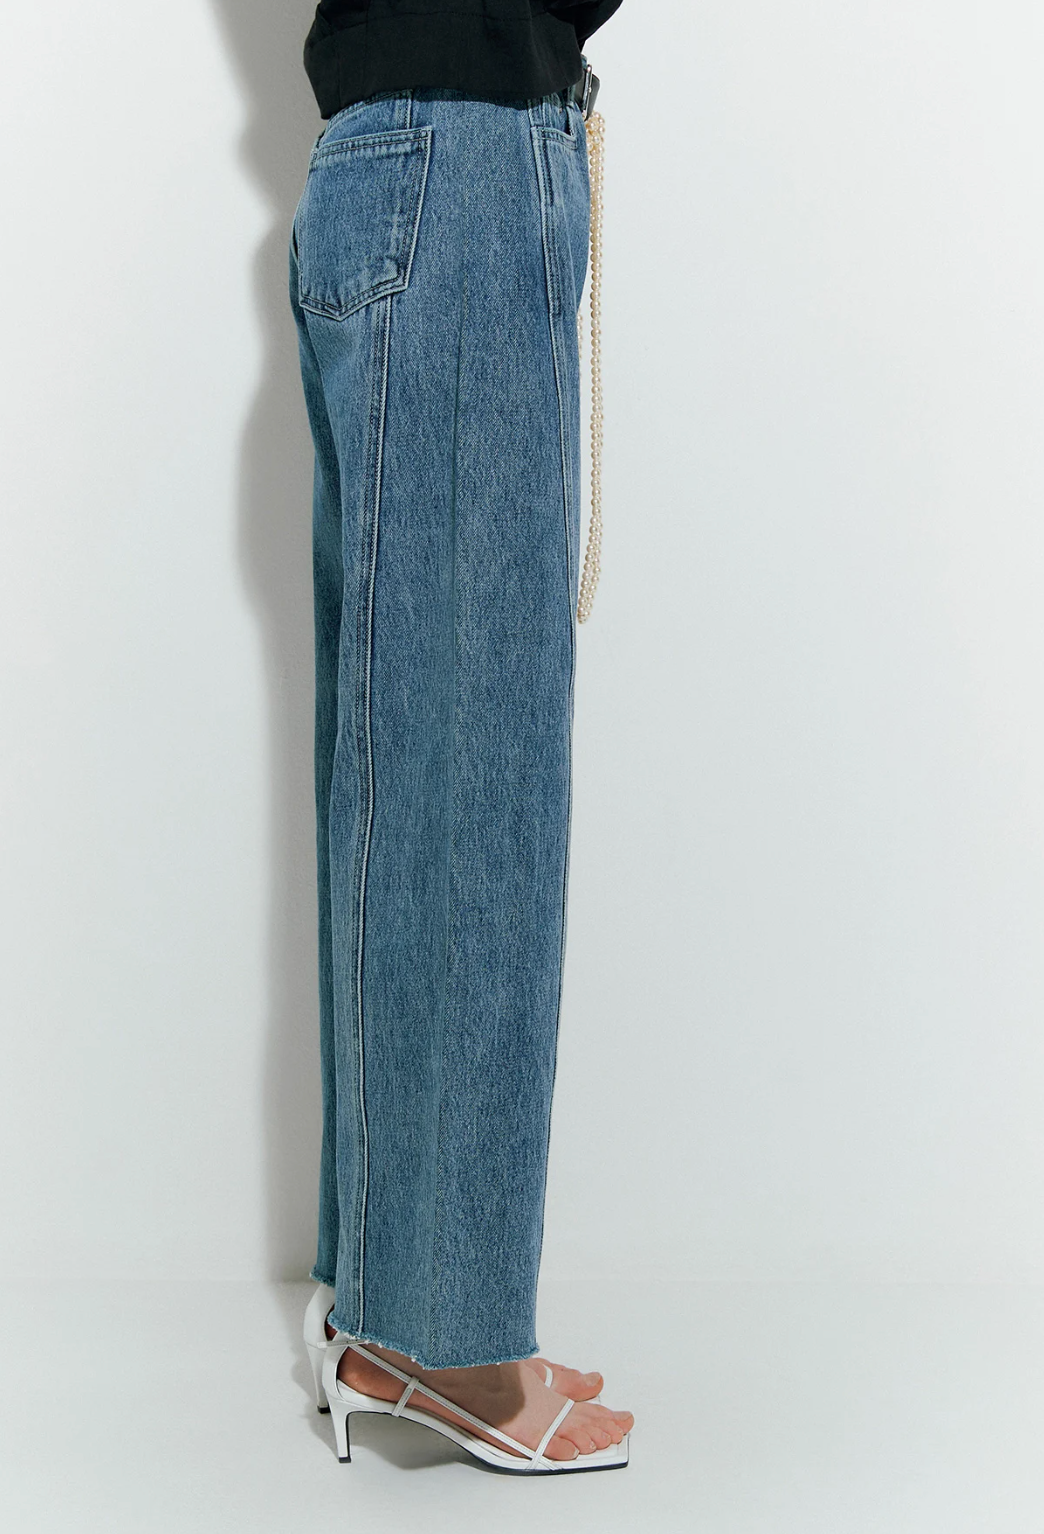 751 Front Seam Denim Jeans